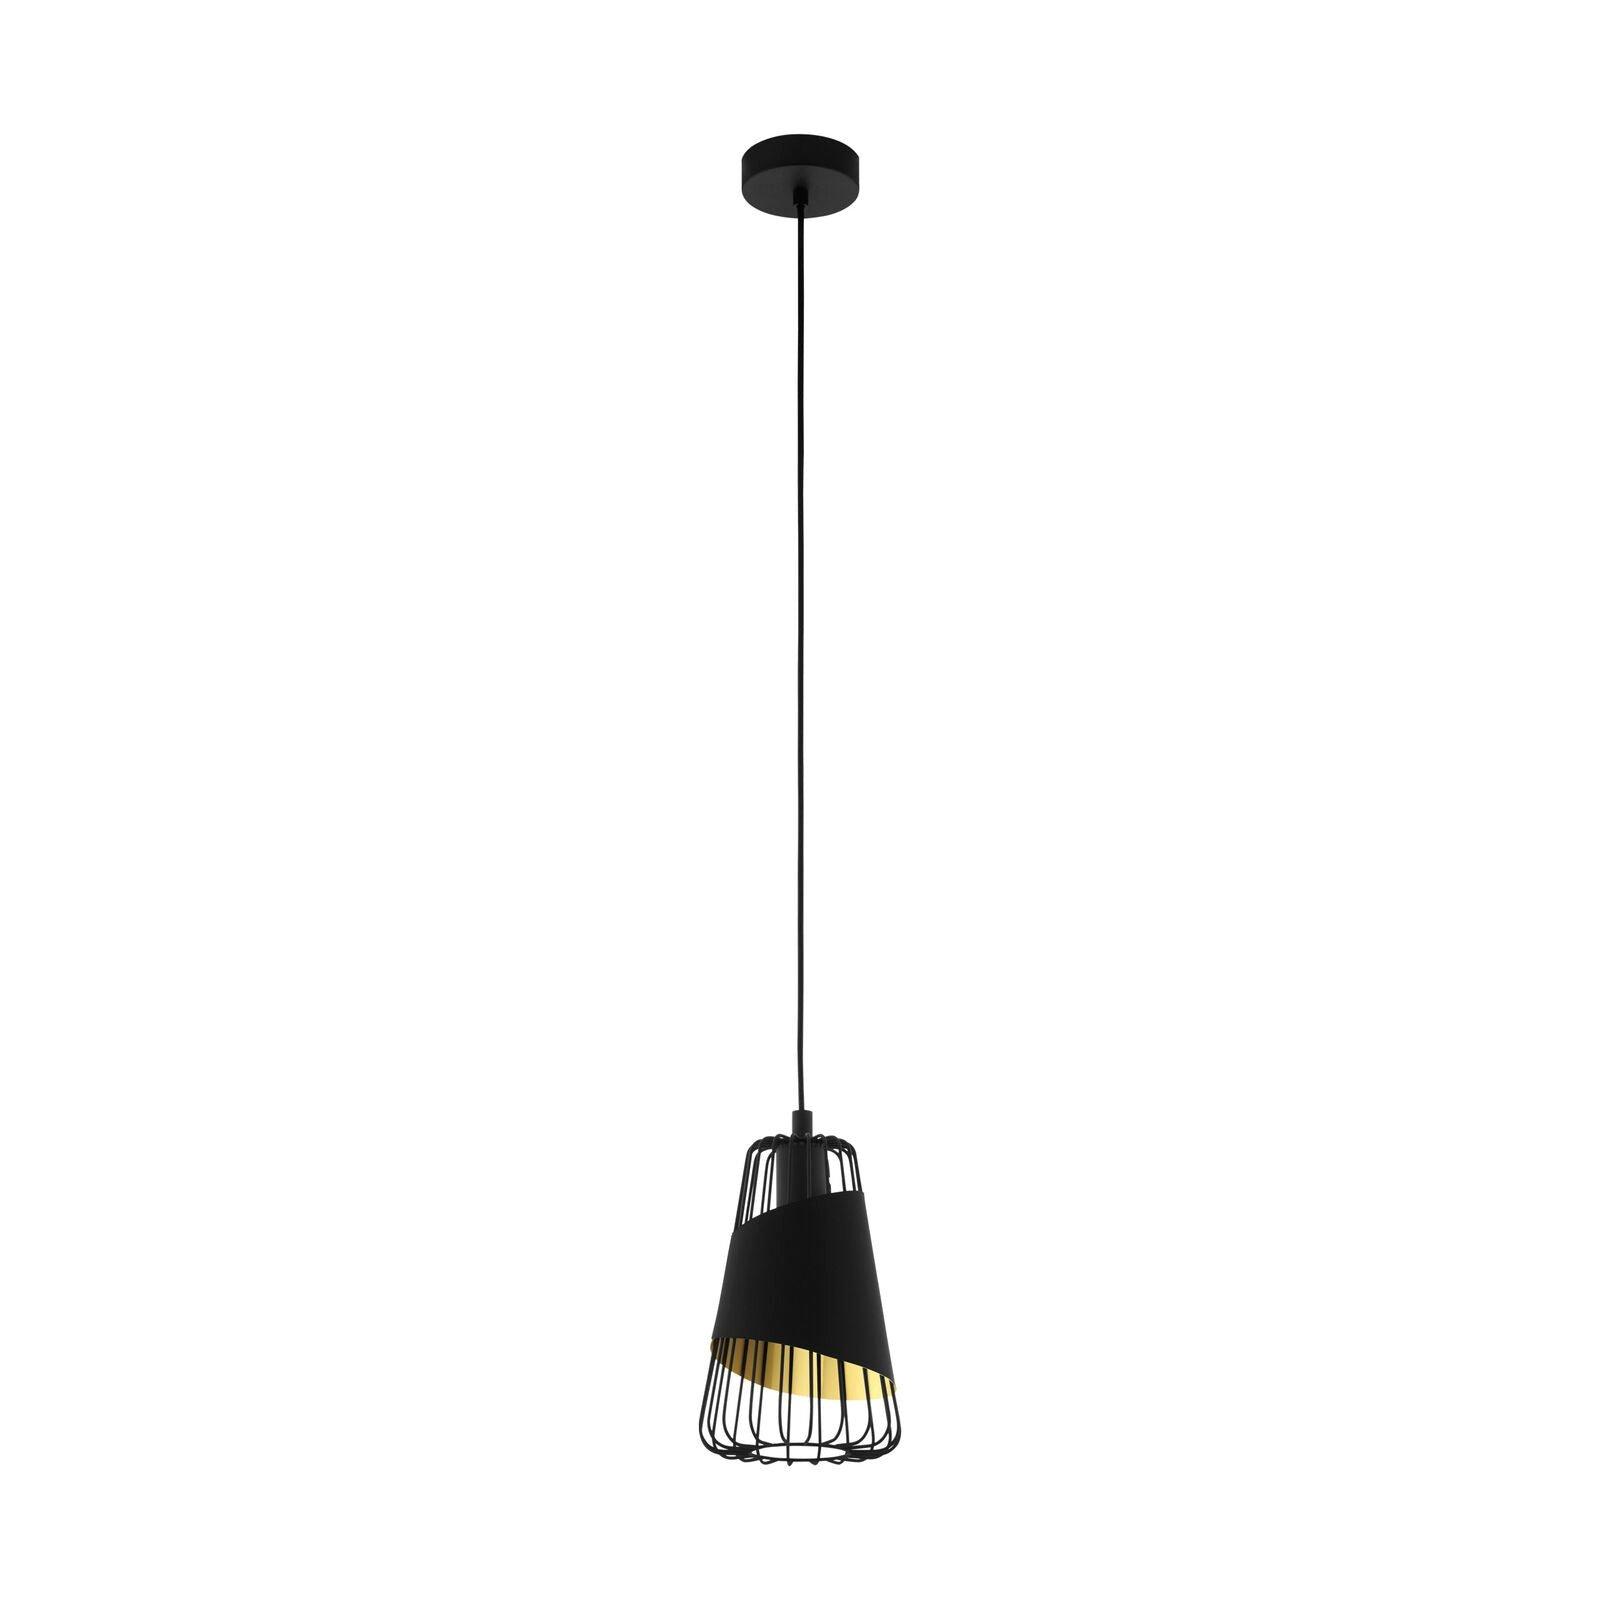 Hanging Ceiling Pendant Light Black & Gold 1x 60W E27 Hallway Feature Lamp